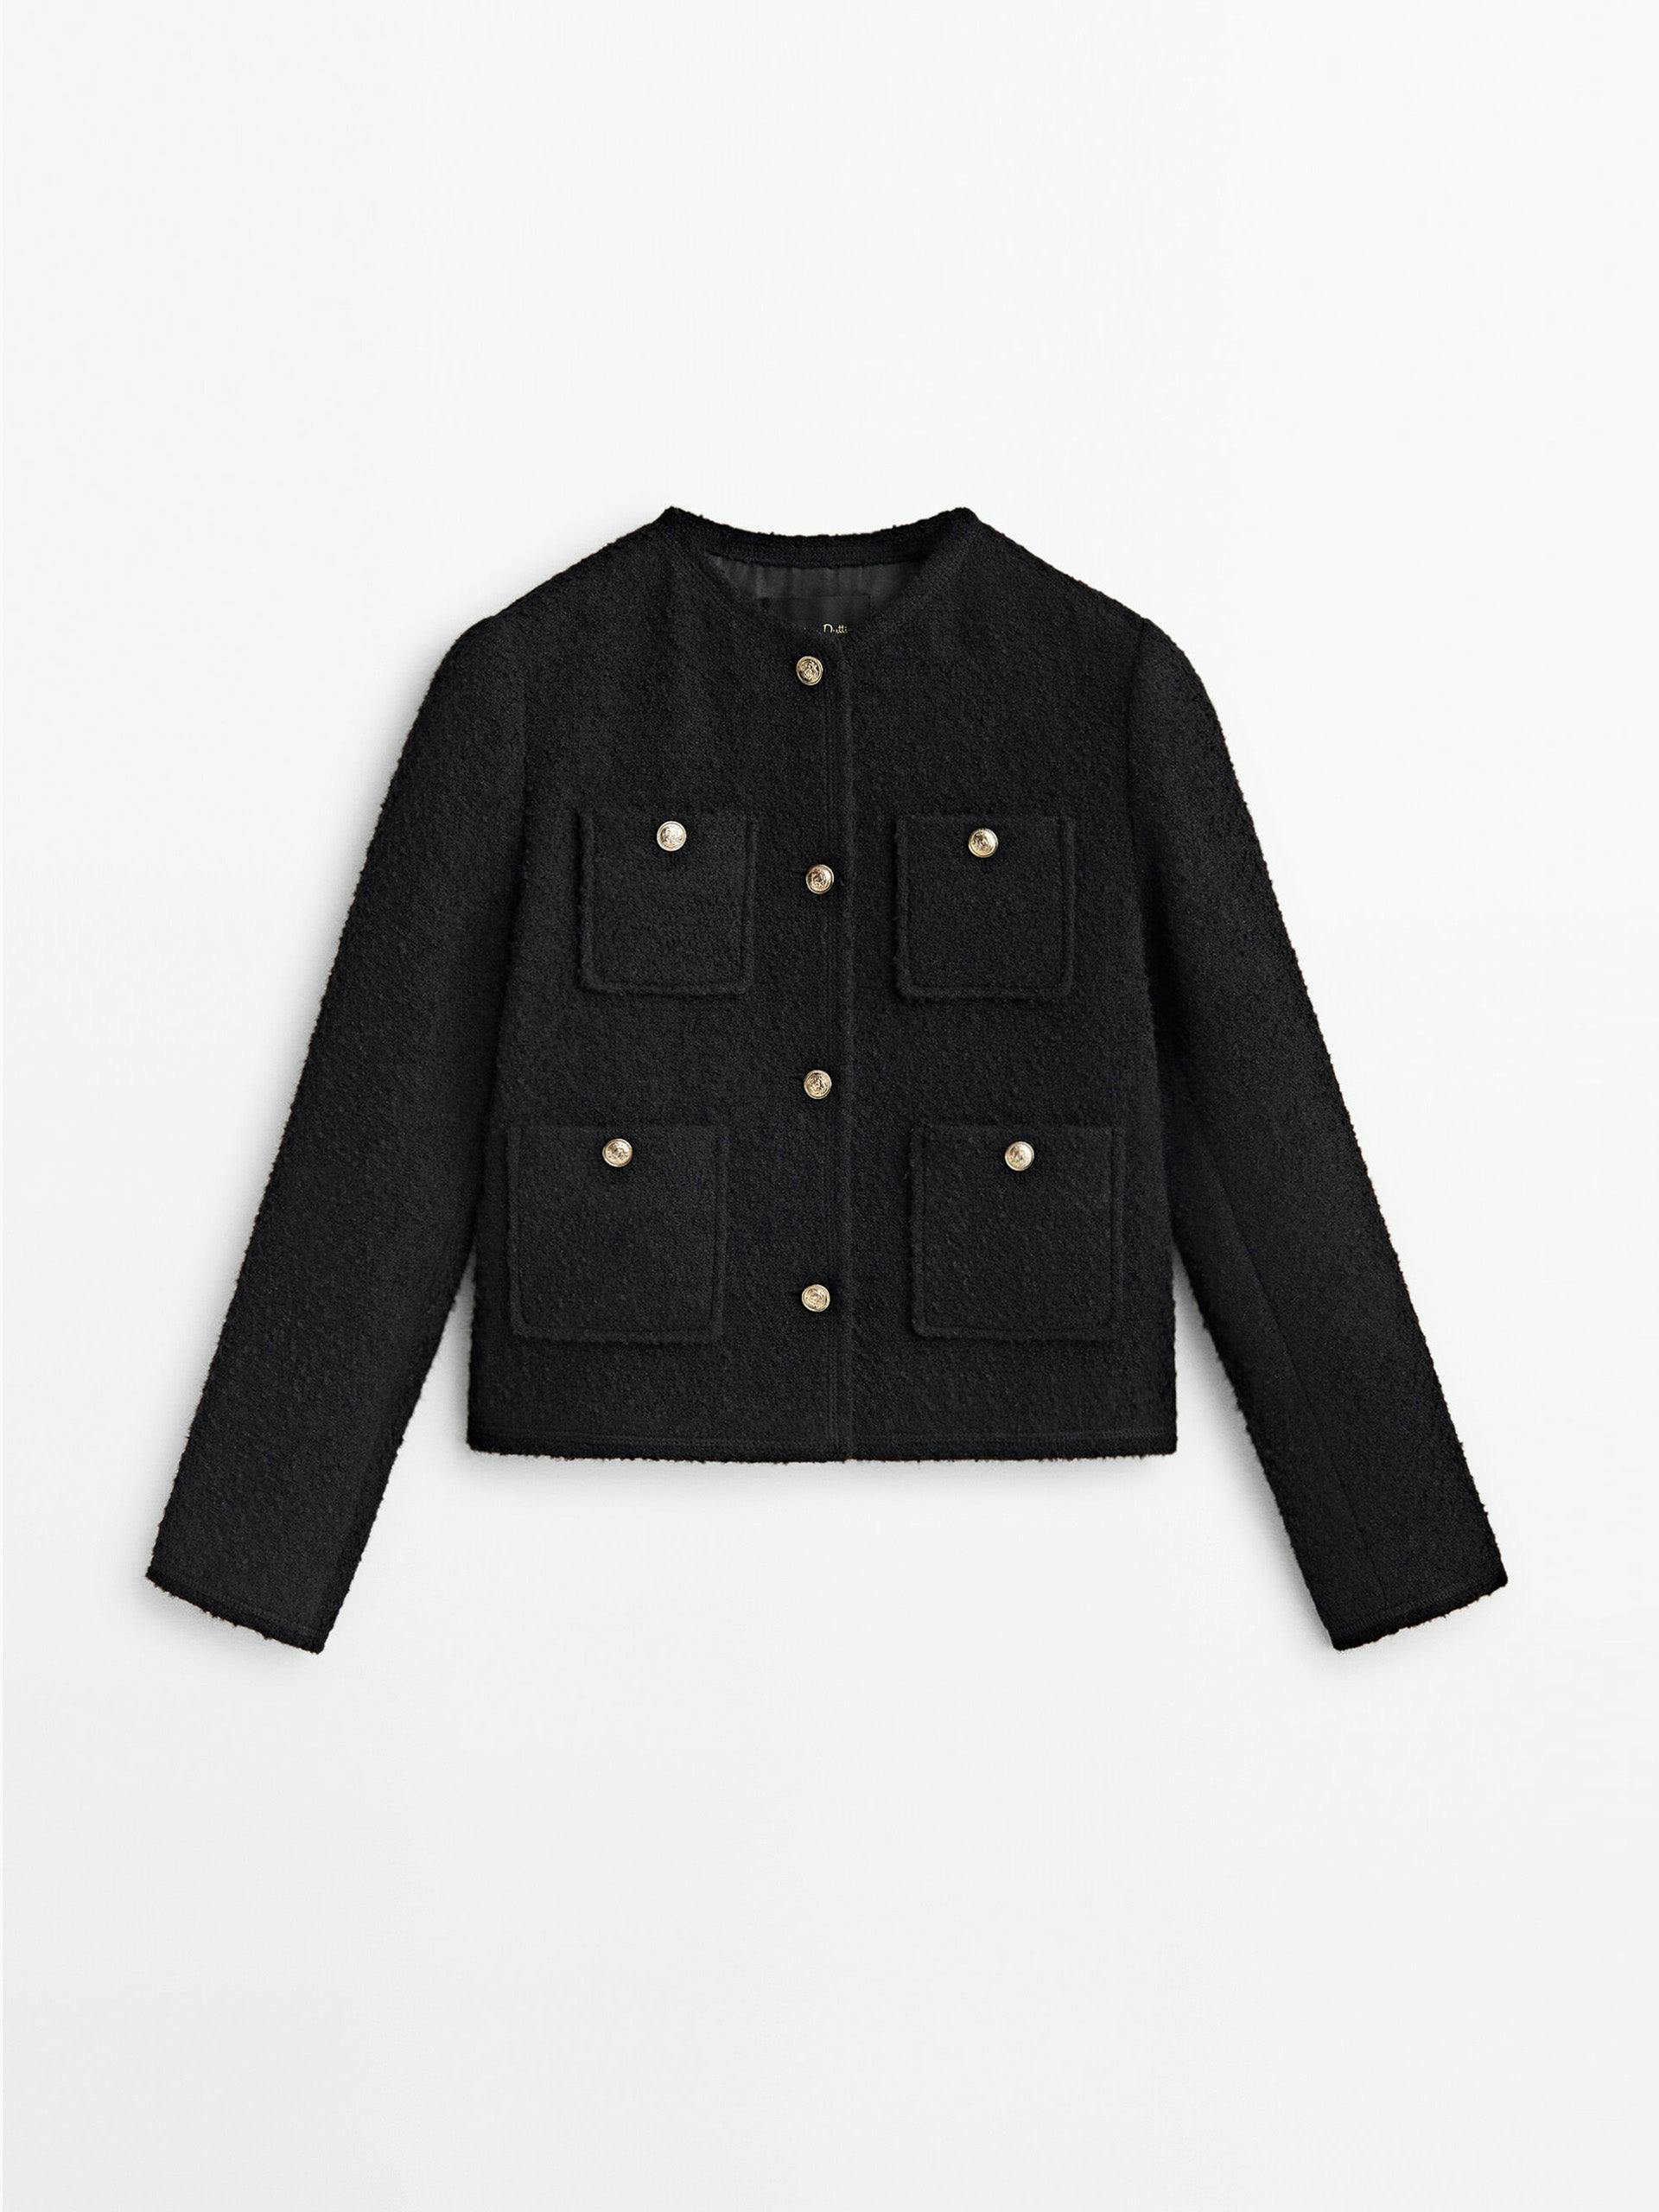 Textured cropped black jacket